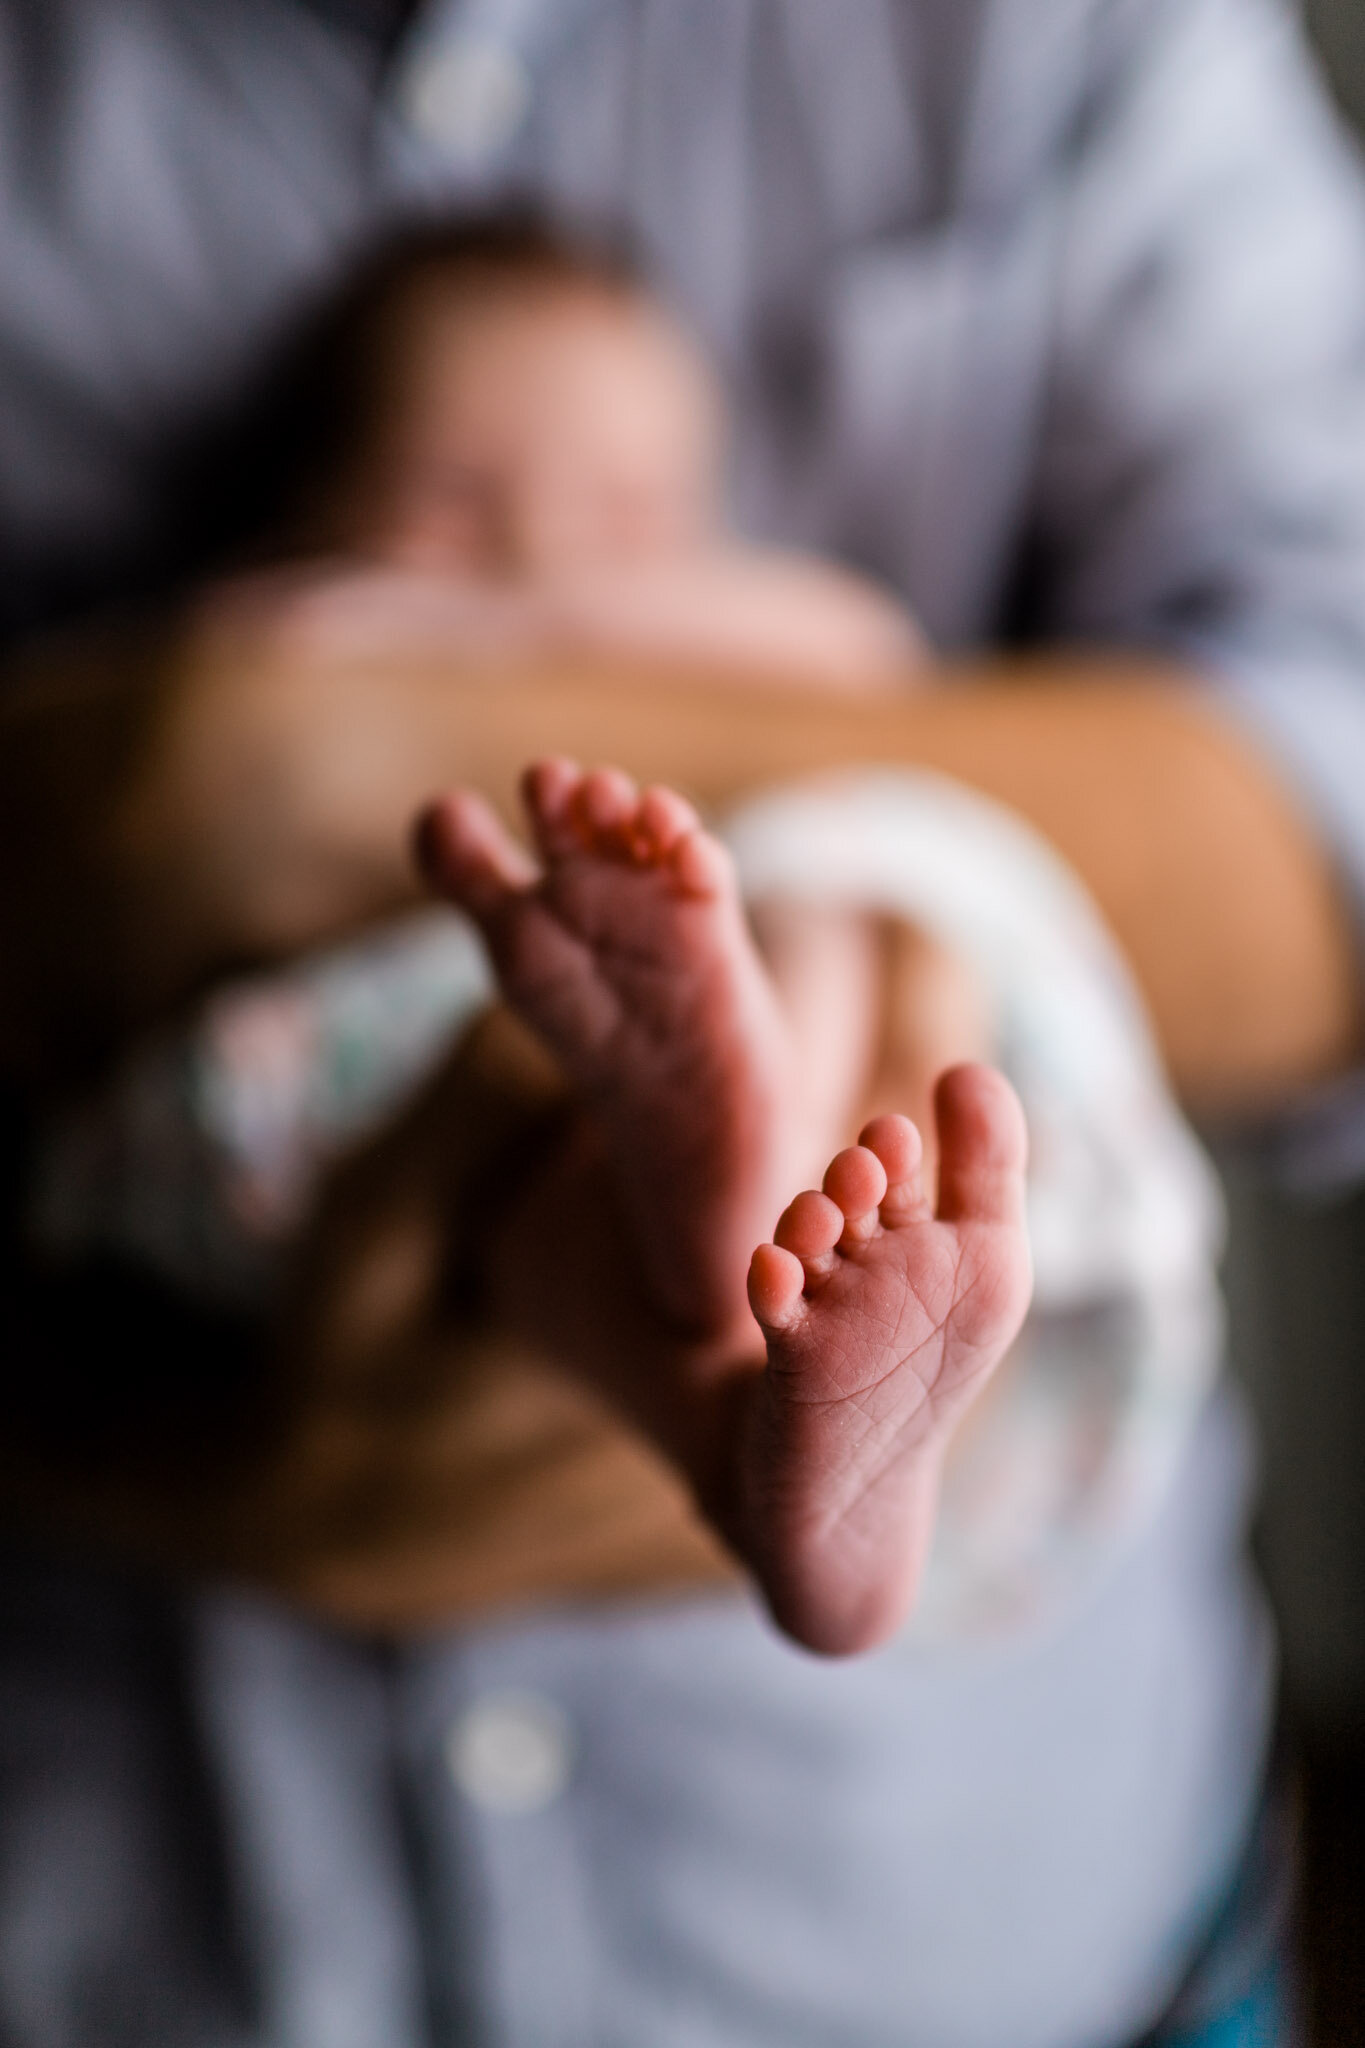 Durham Newborn Photographer | By G. Lin Photography | Baby's feet